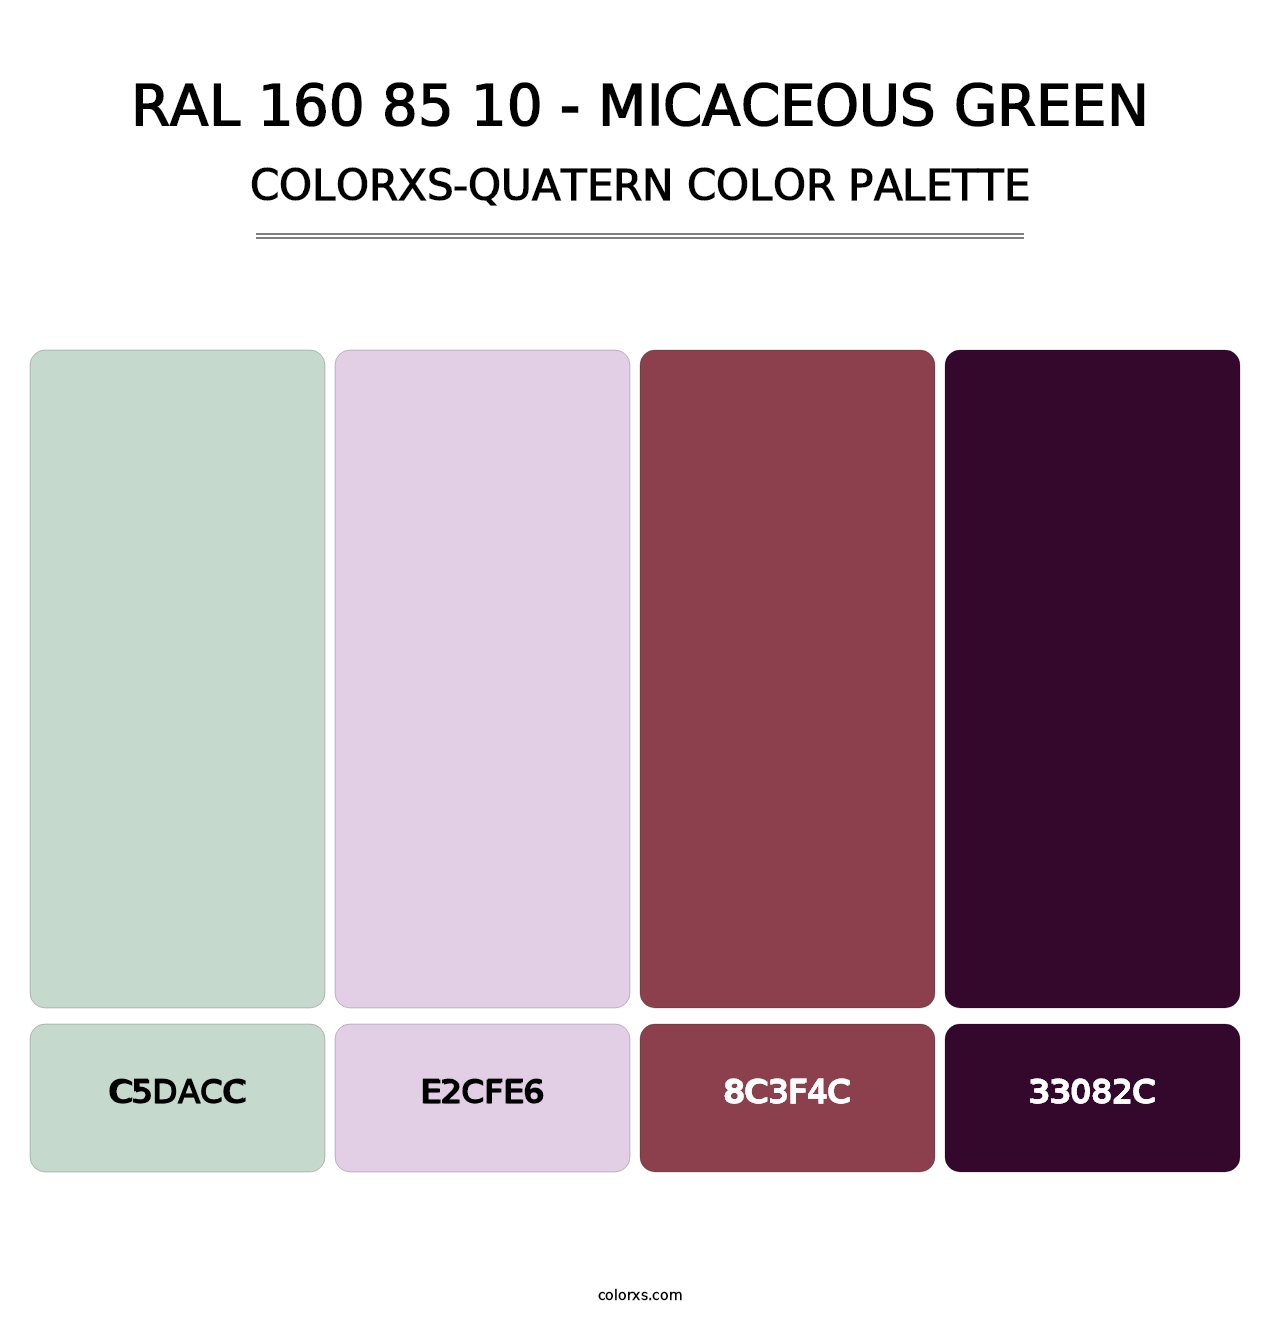 RAL 160 85 10 - Micaceous Green - Colorxs Quatern Palette